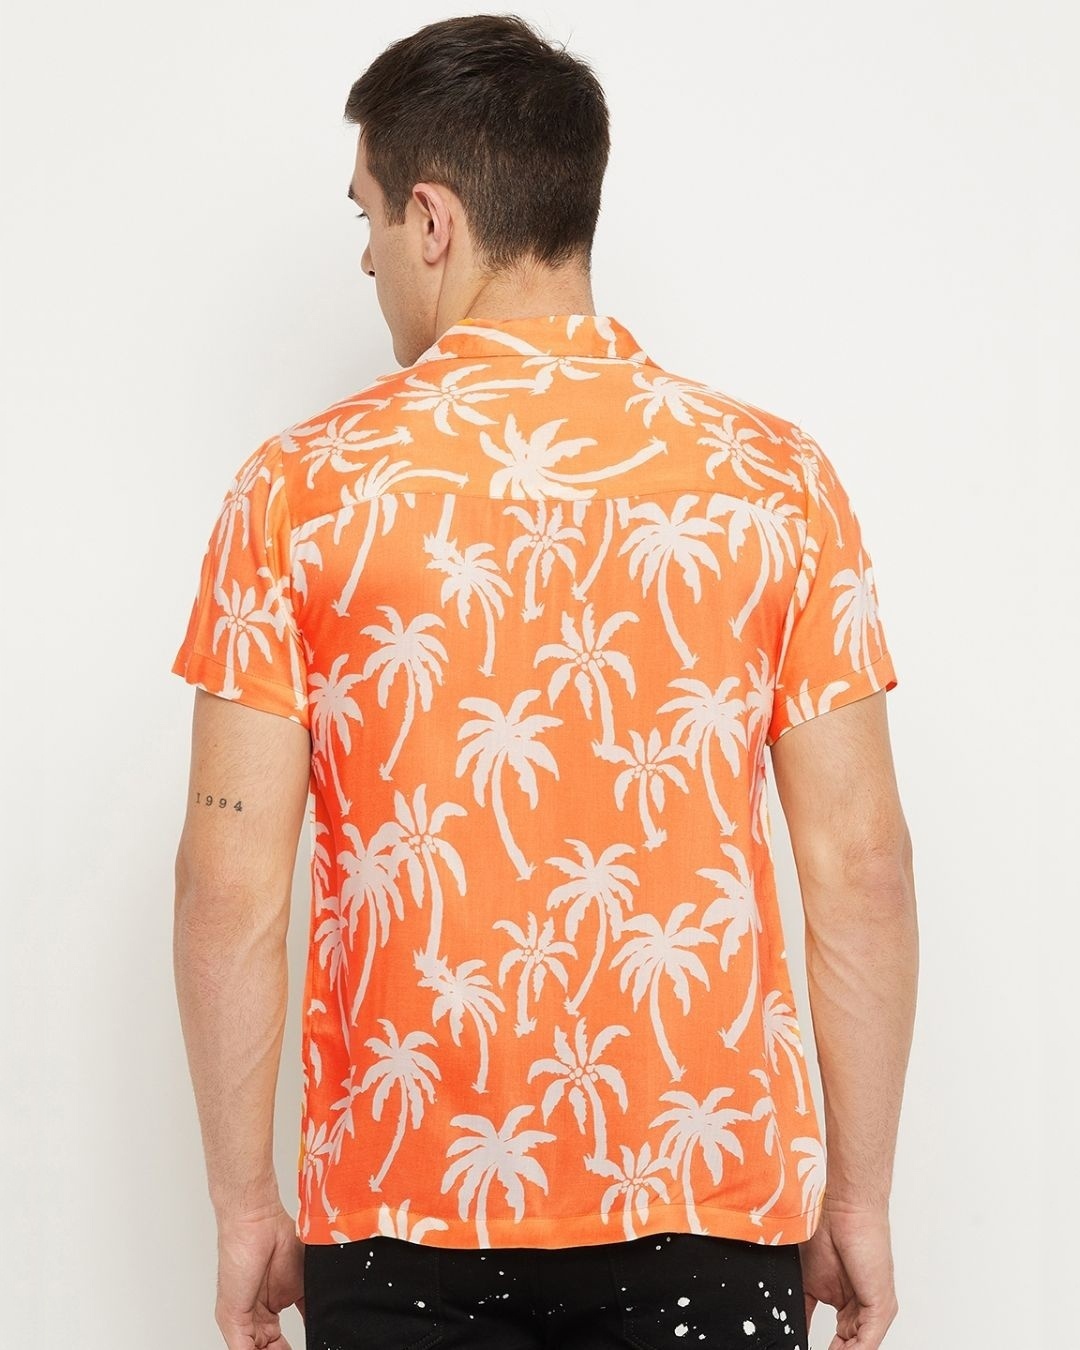 Shop Men's Orange All Over Palm Trees Printed Shirt-Design